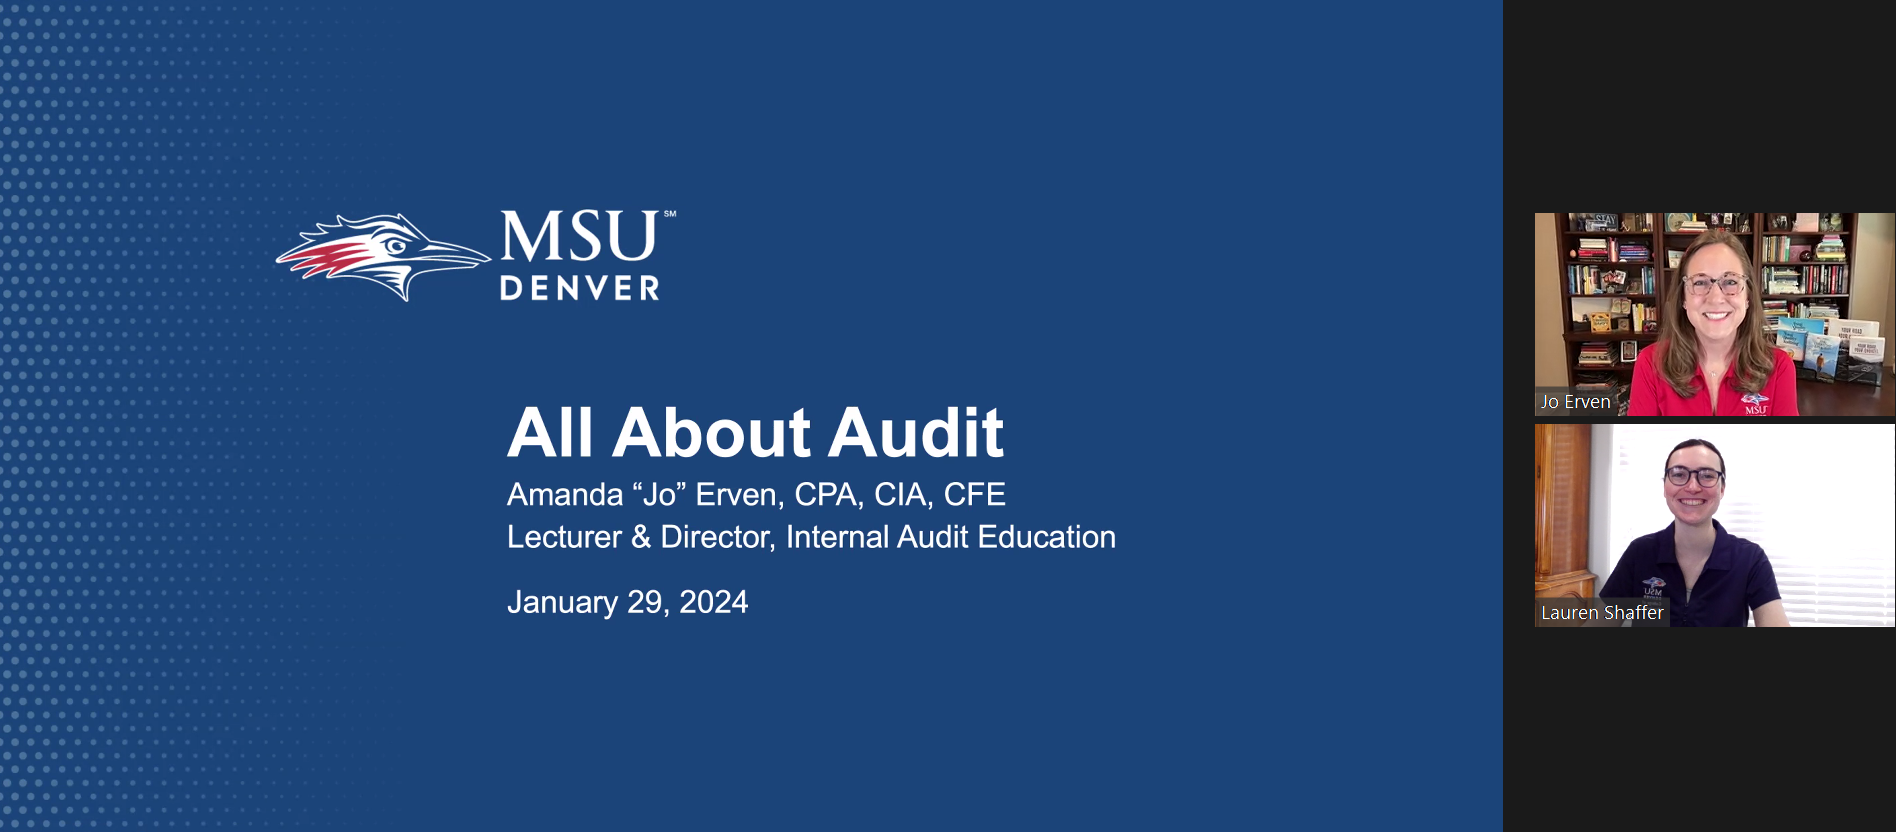 All About Audit virtual event title page - Jo & Lauren